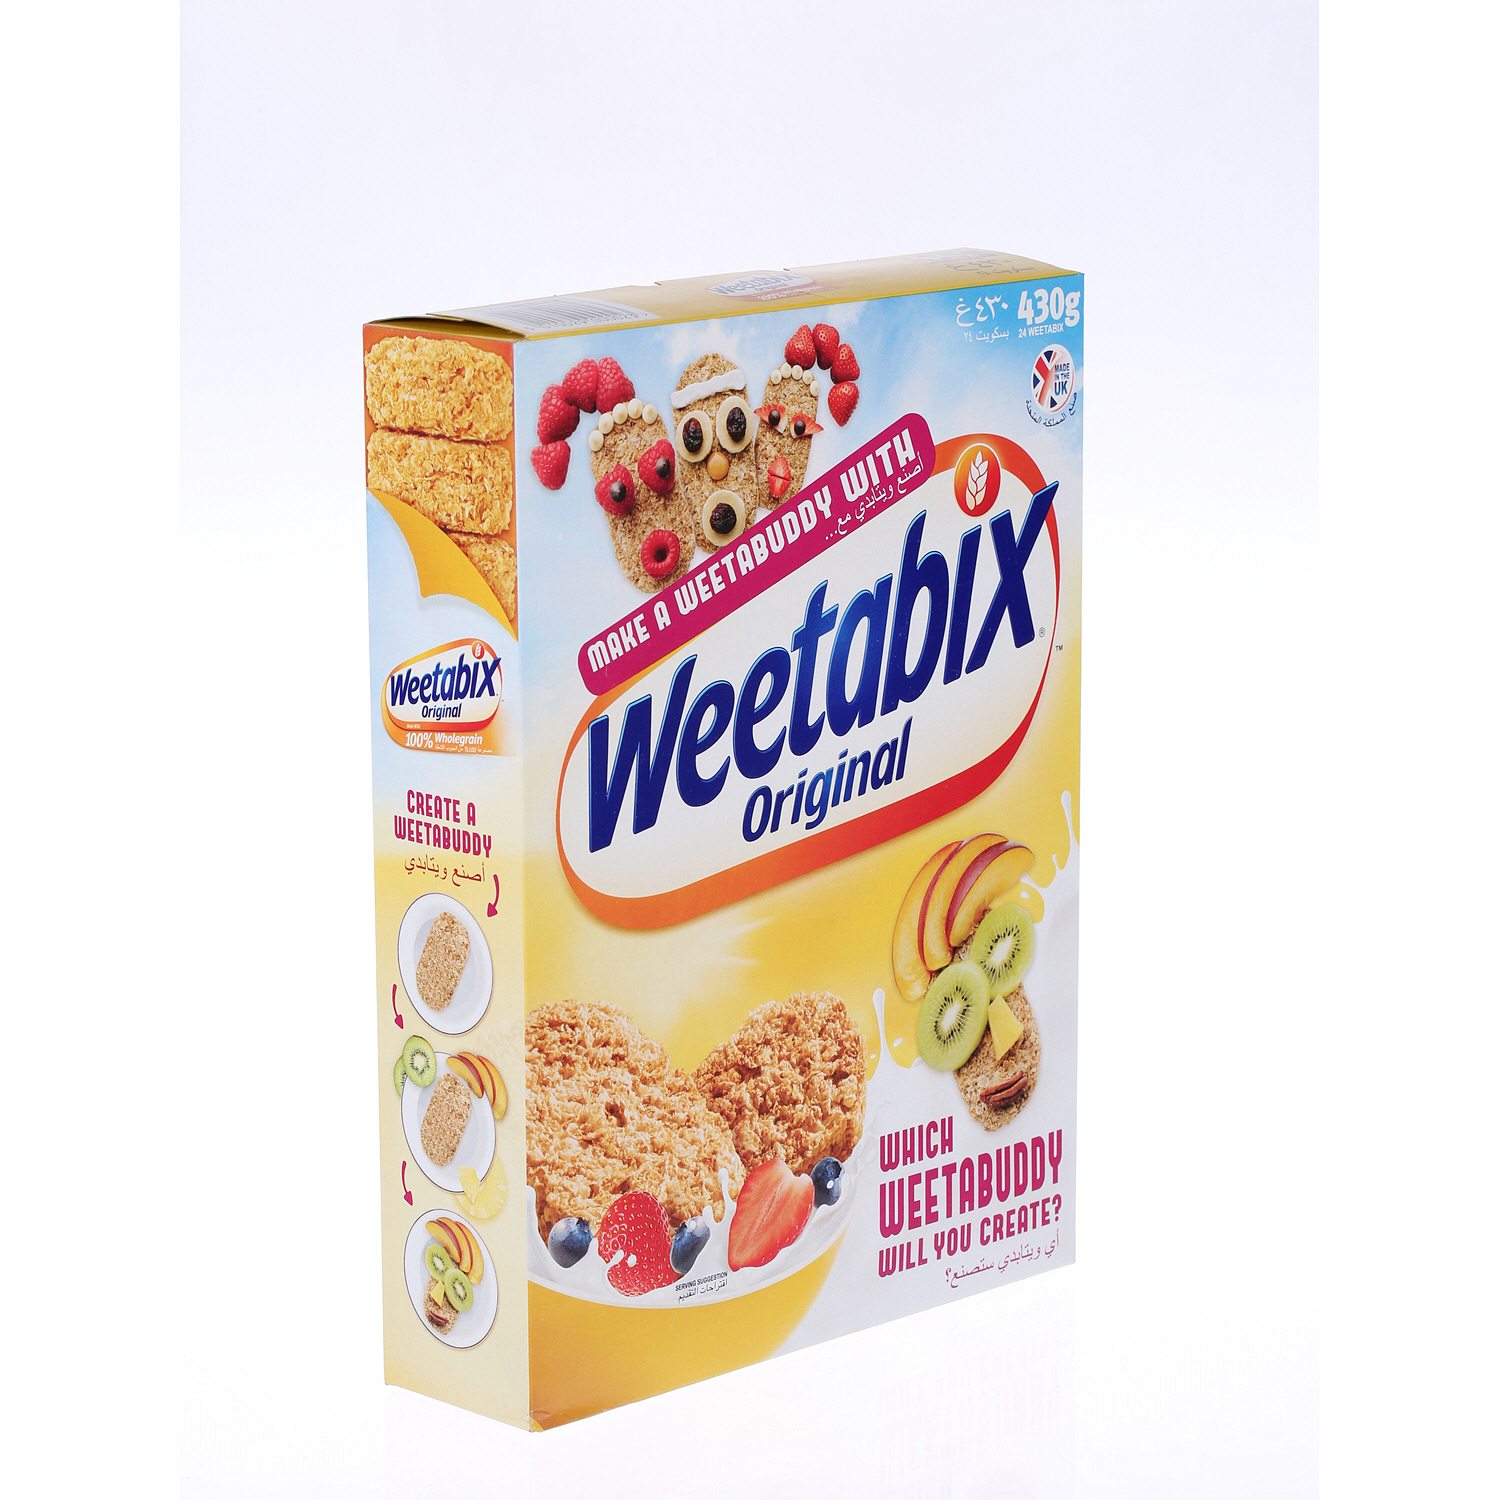 Weetabix Cereal 430 g